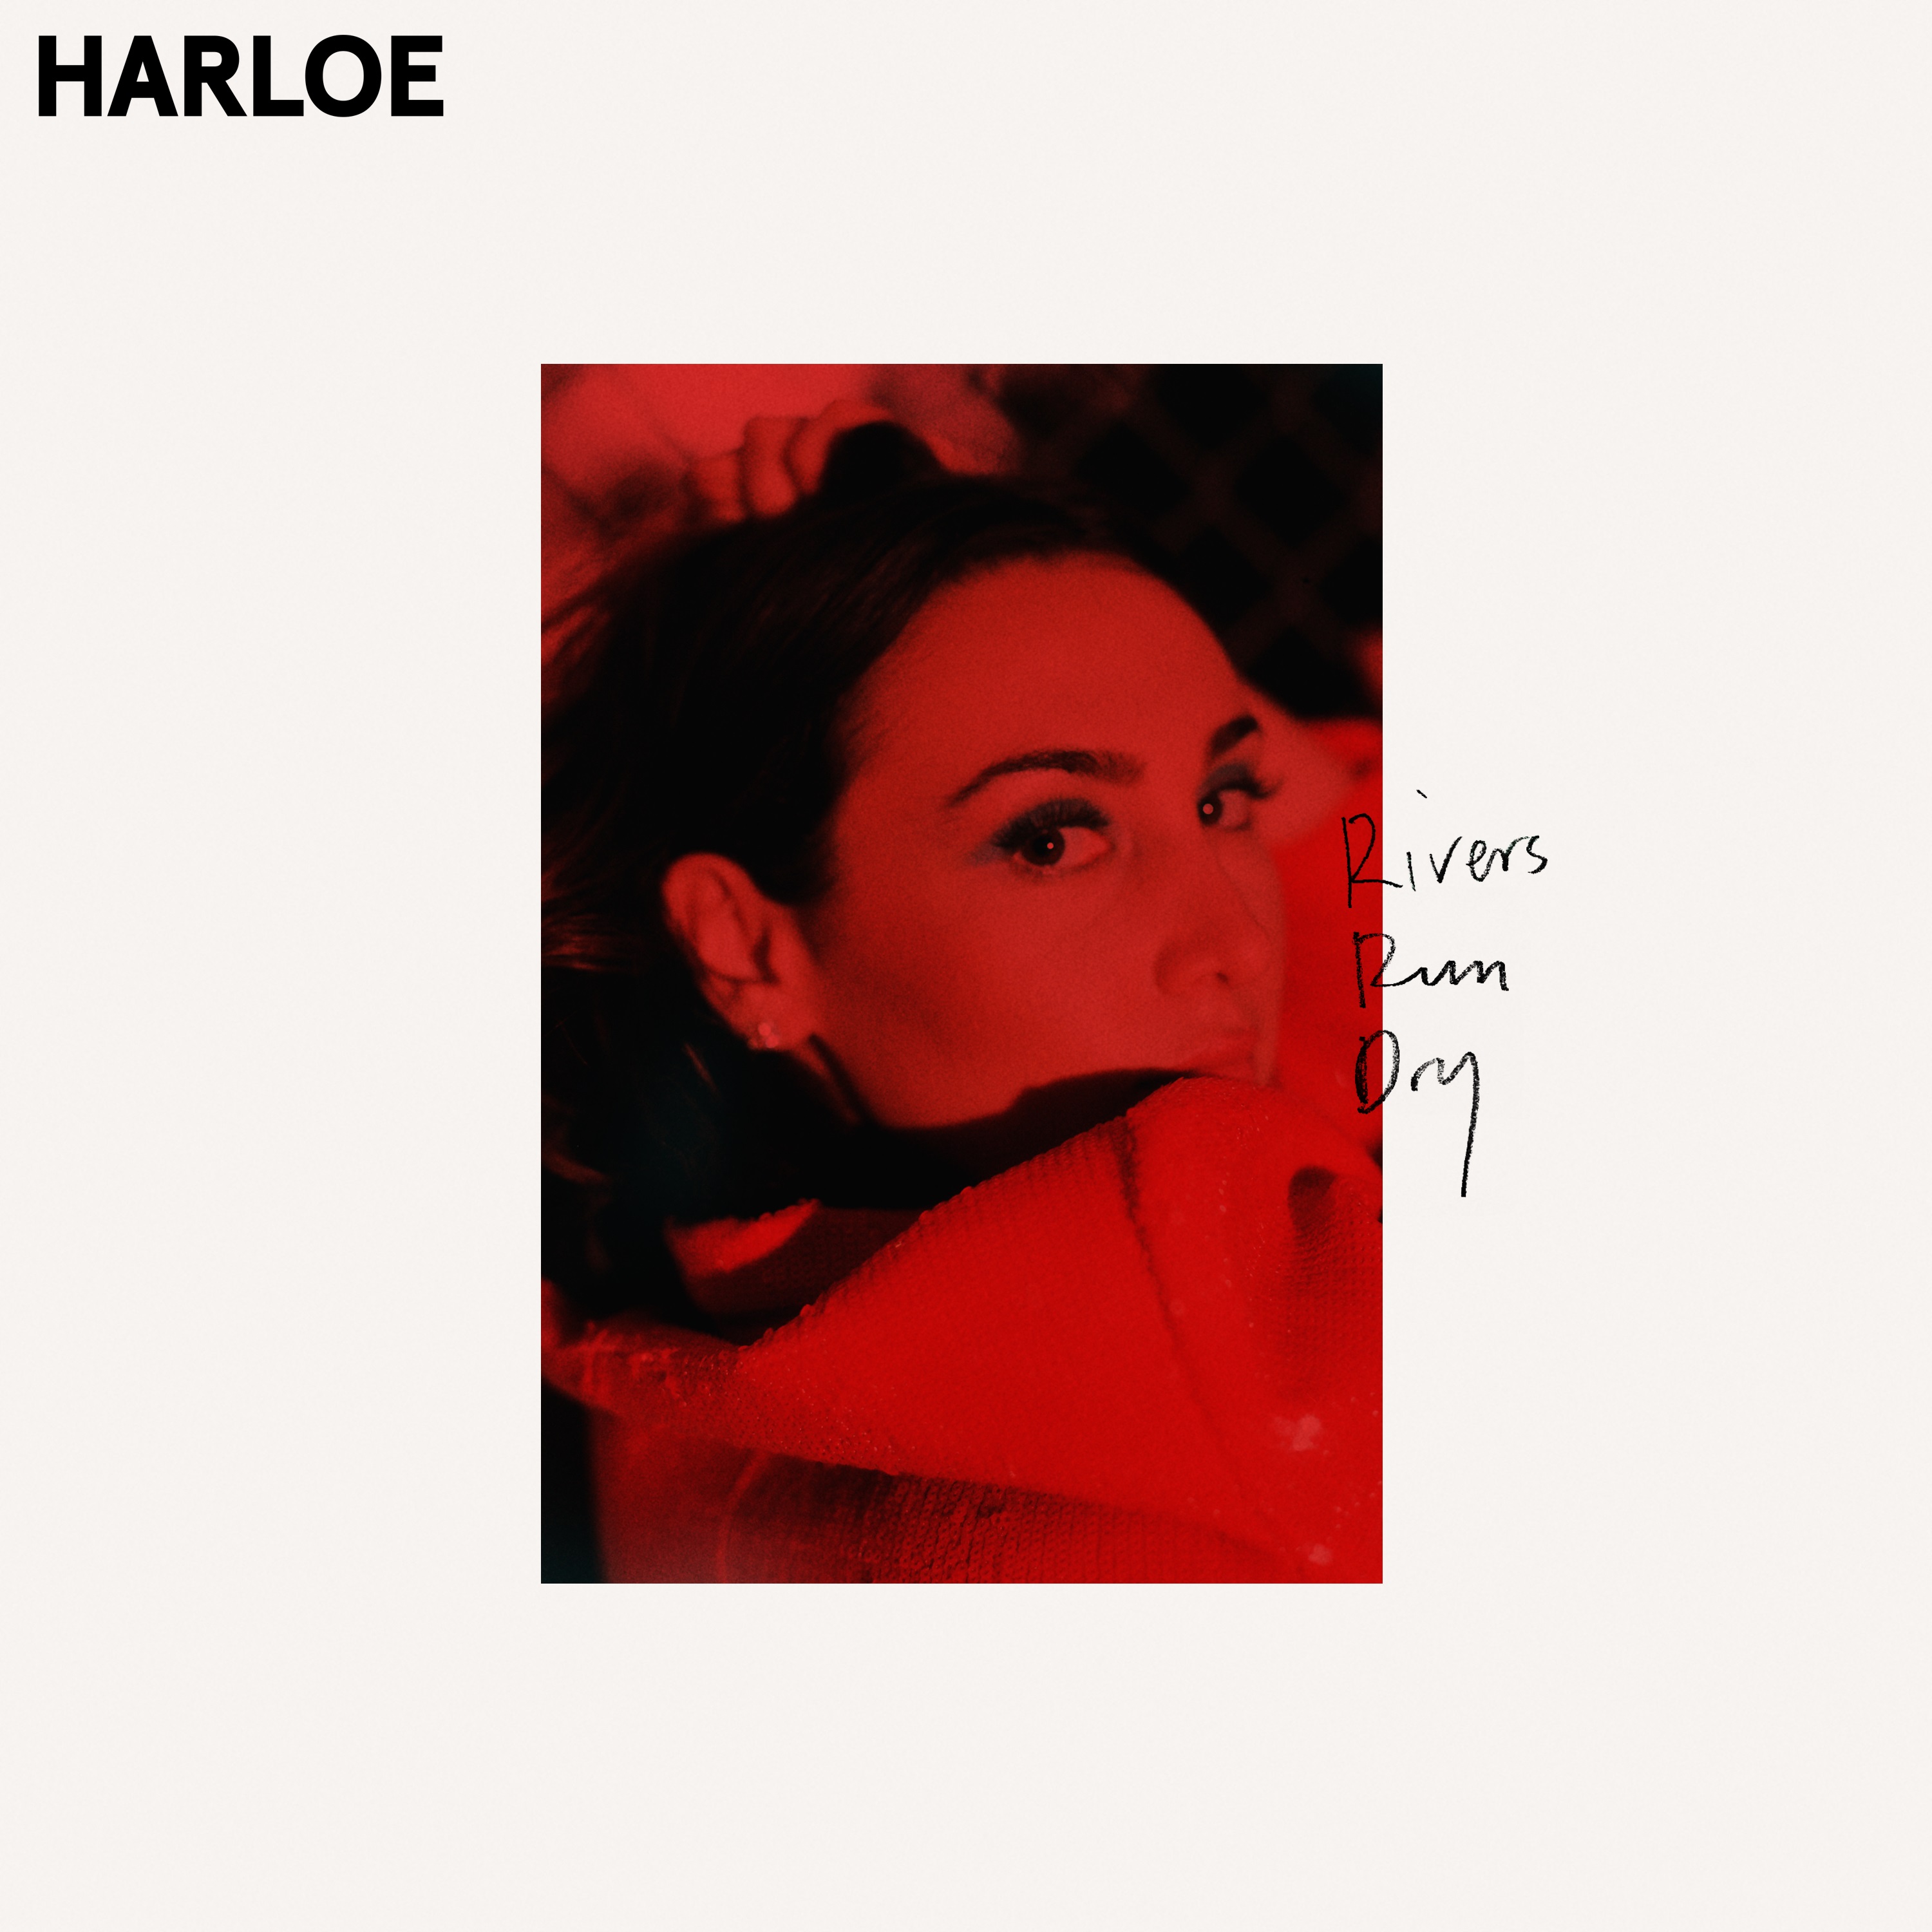 HARLOE Releases New EP “Rivers Run Dry”